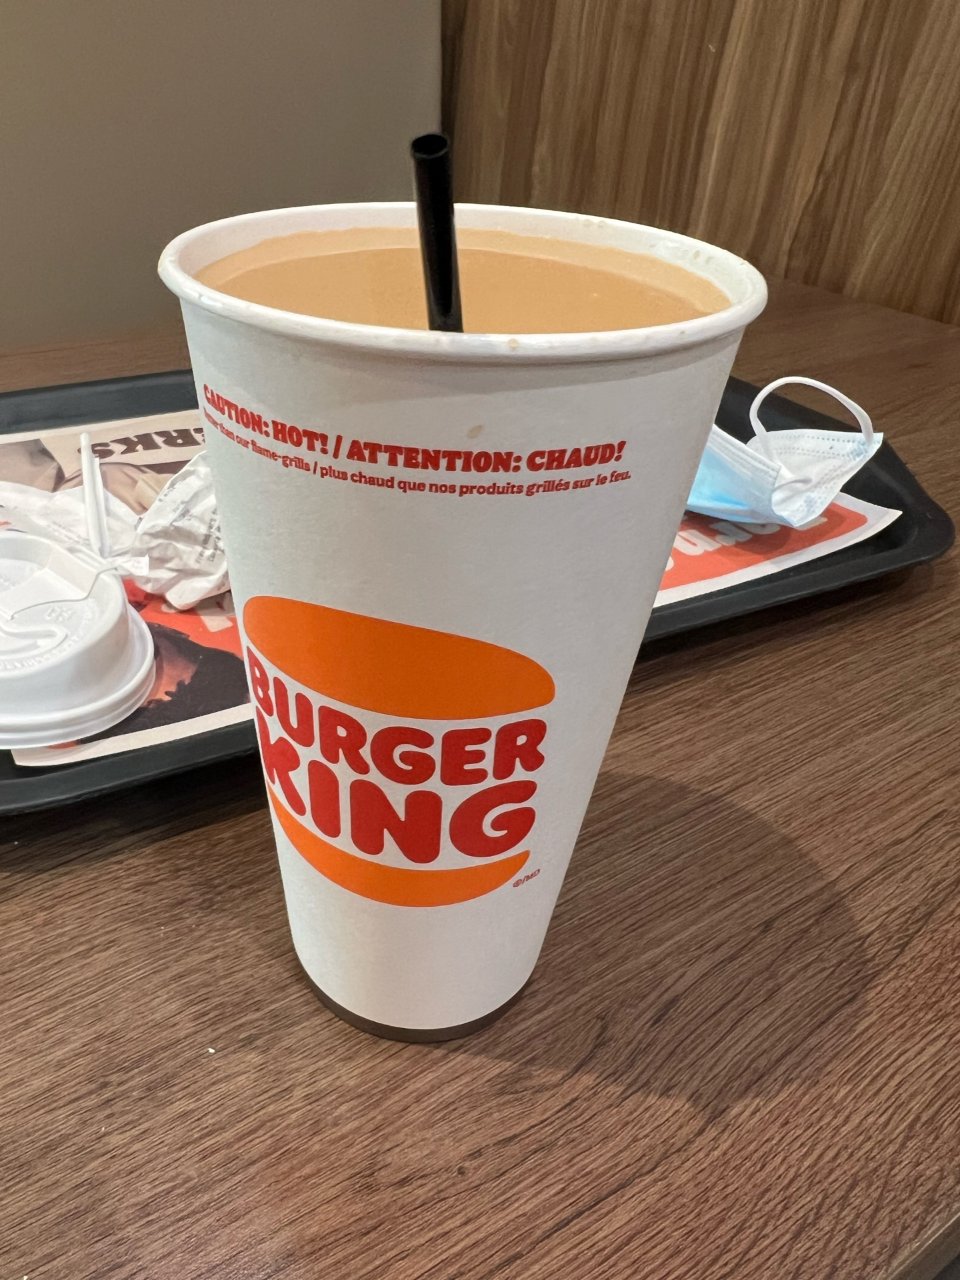 Burger 🍔 king 的早餐🥣...